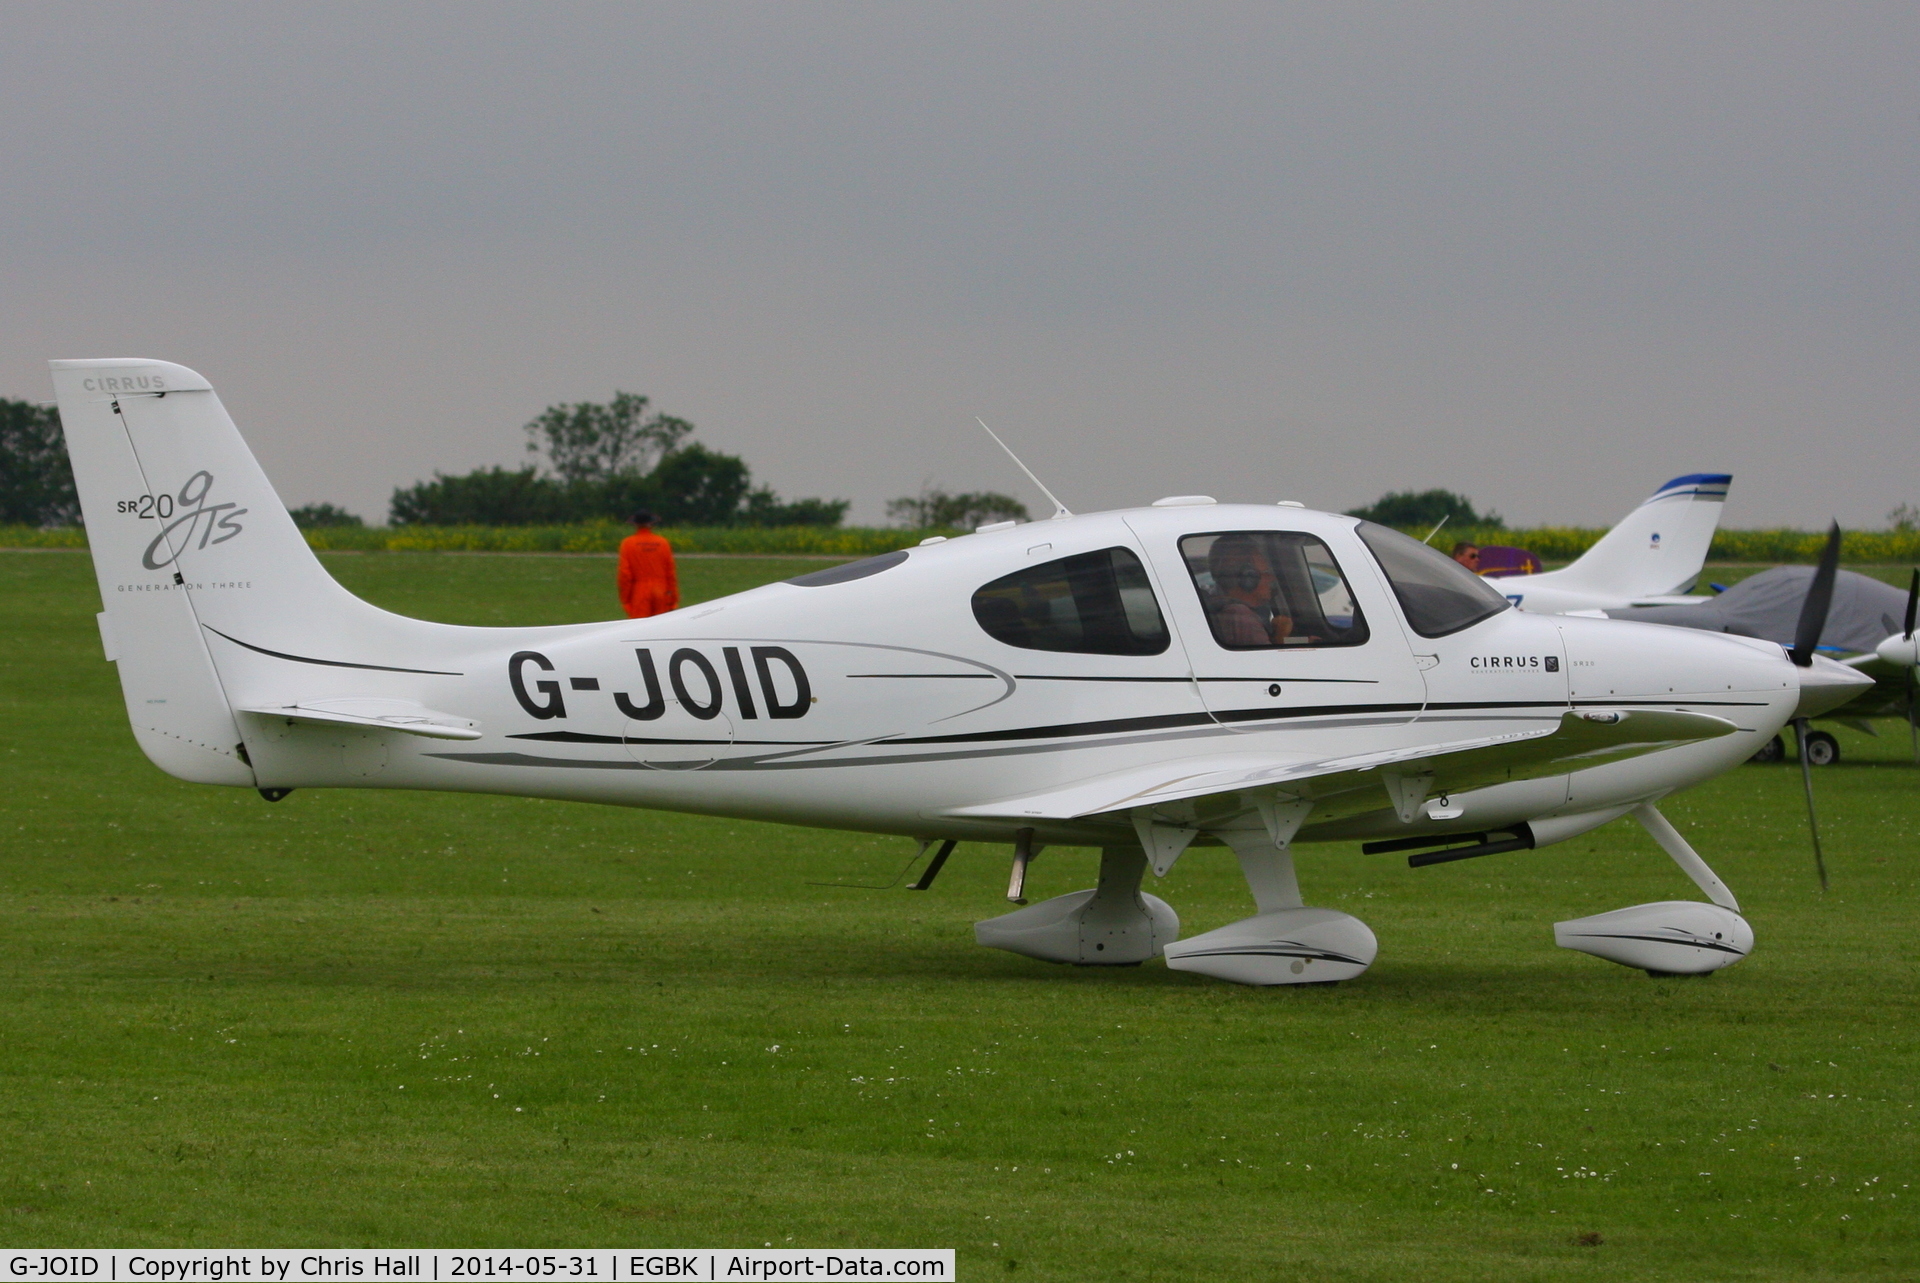 G-JOID, 2008 Cirrus SR20 G3 GTS C/N 1910, at AeroExpo 2014